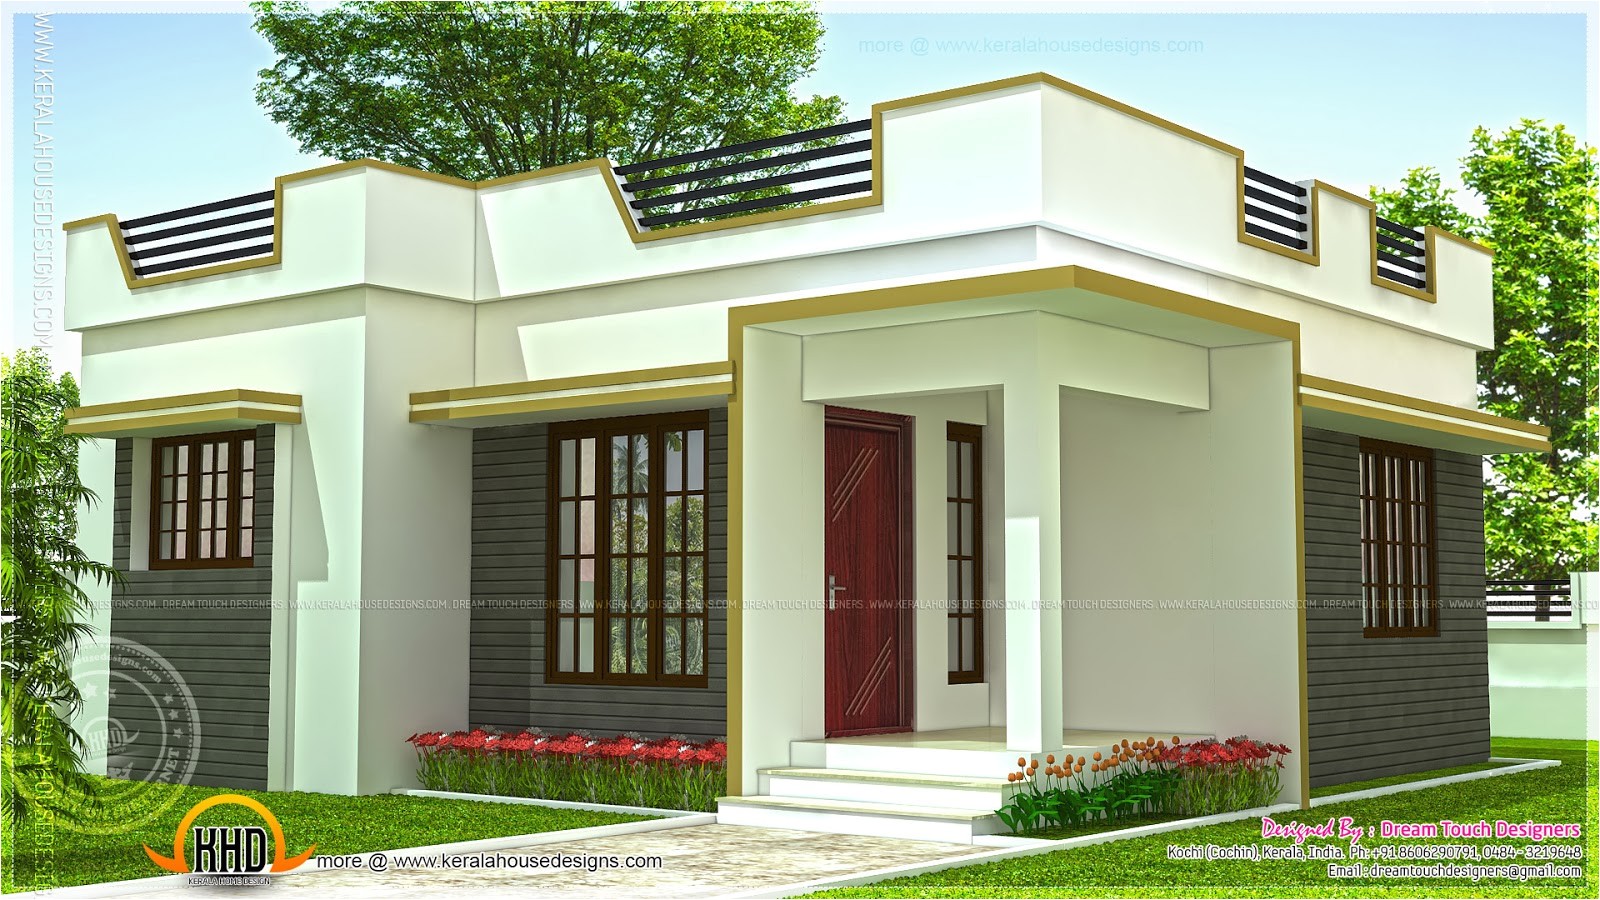 kerala small house low budget plan modern plans blog